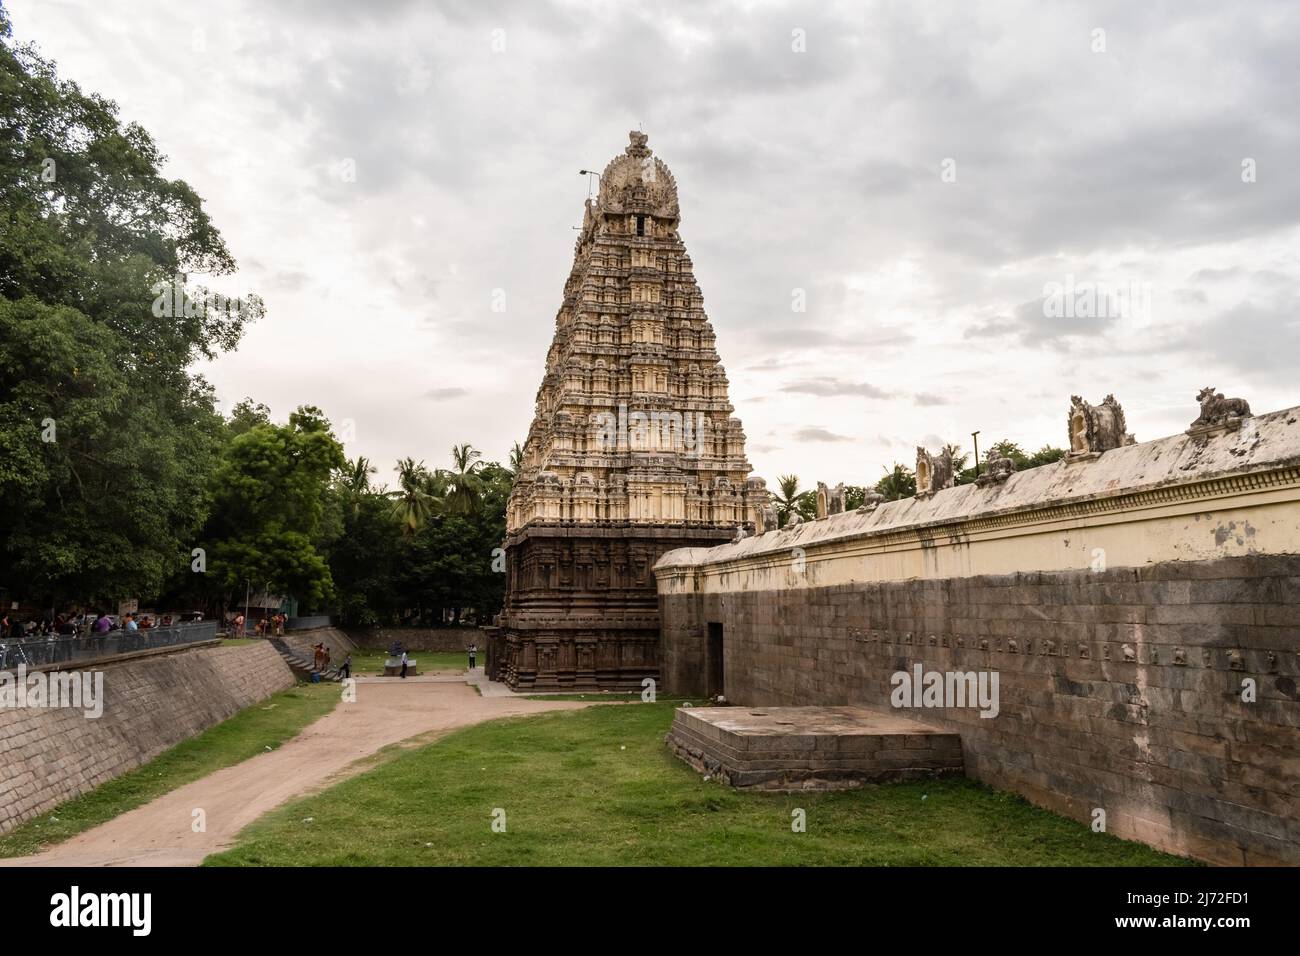 Vellore, Tamil Nadu, India - September 2018: The ancient Hindu Jalakanteswarar temple inside the Vellore Fort complex. Stock Photo